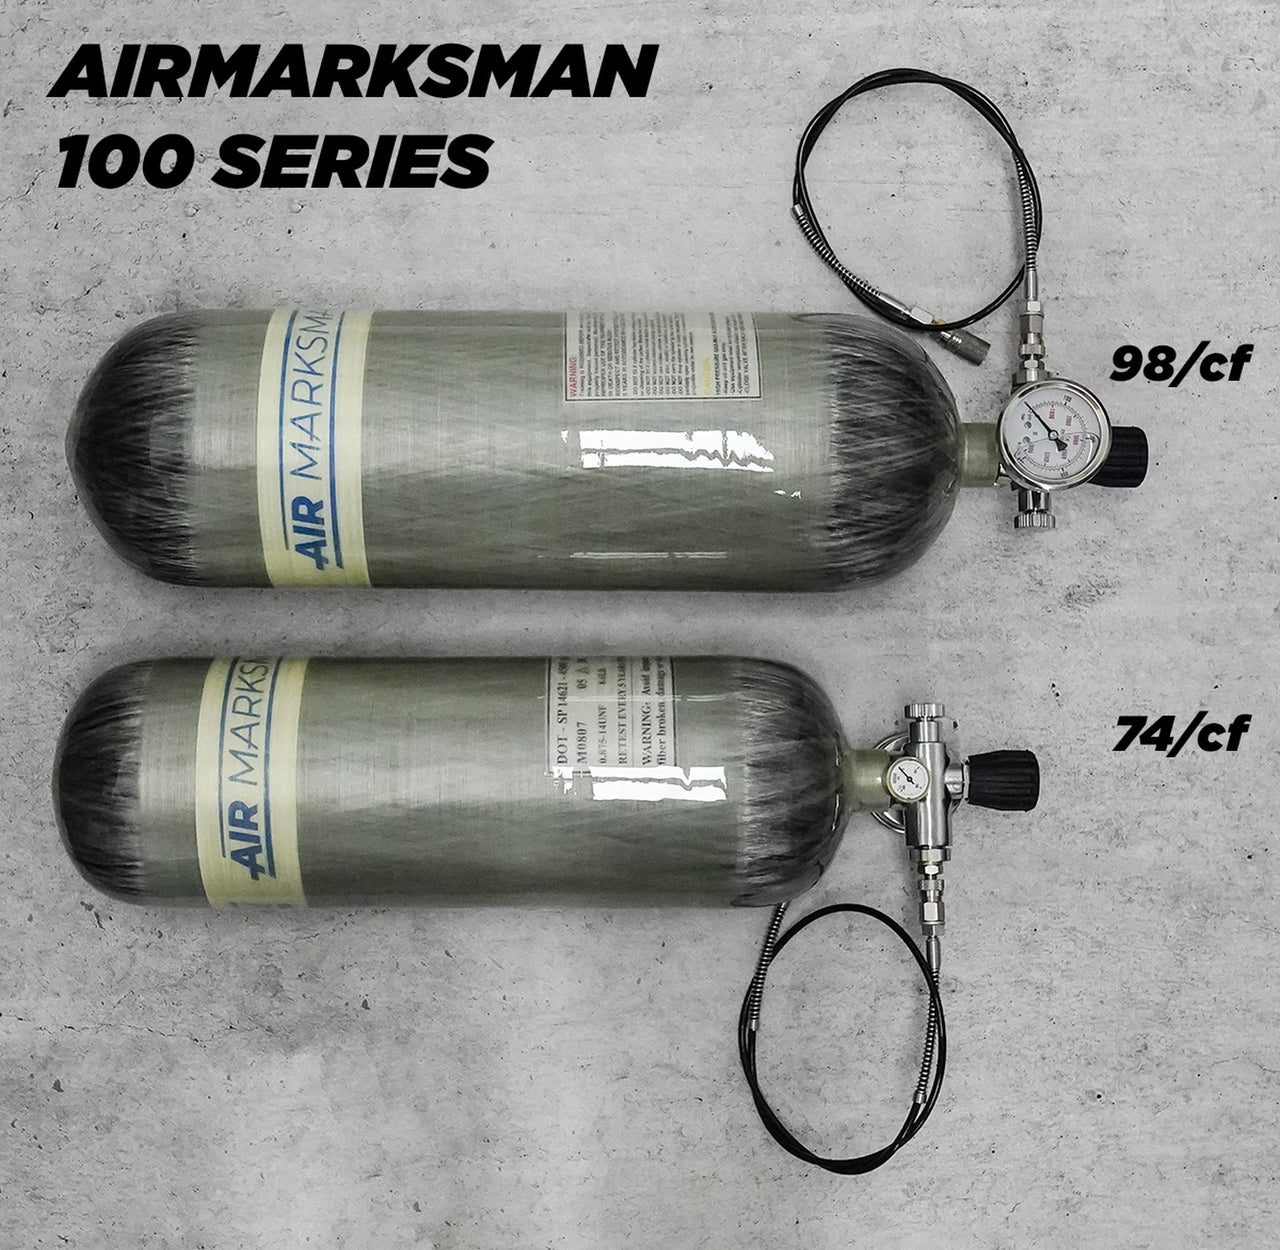 Airmarksman Carbon Fiber Tank | 4500 PSI | 6.8L Capacity